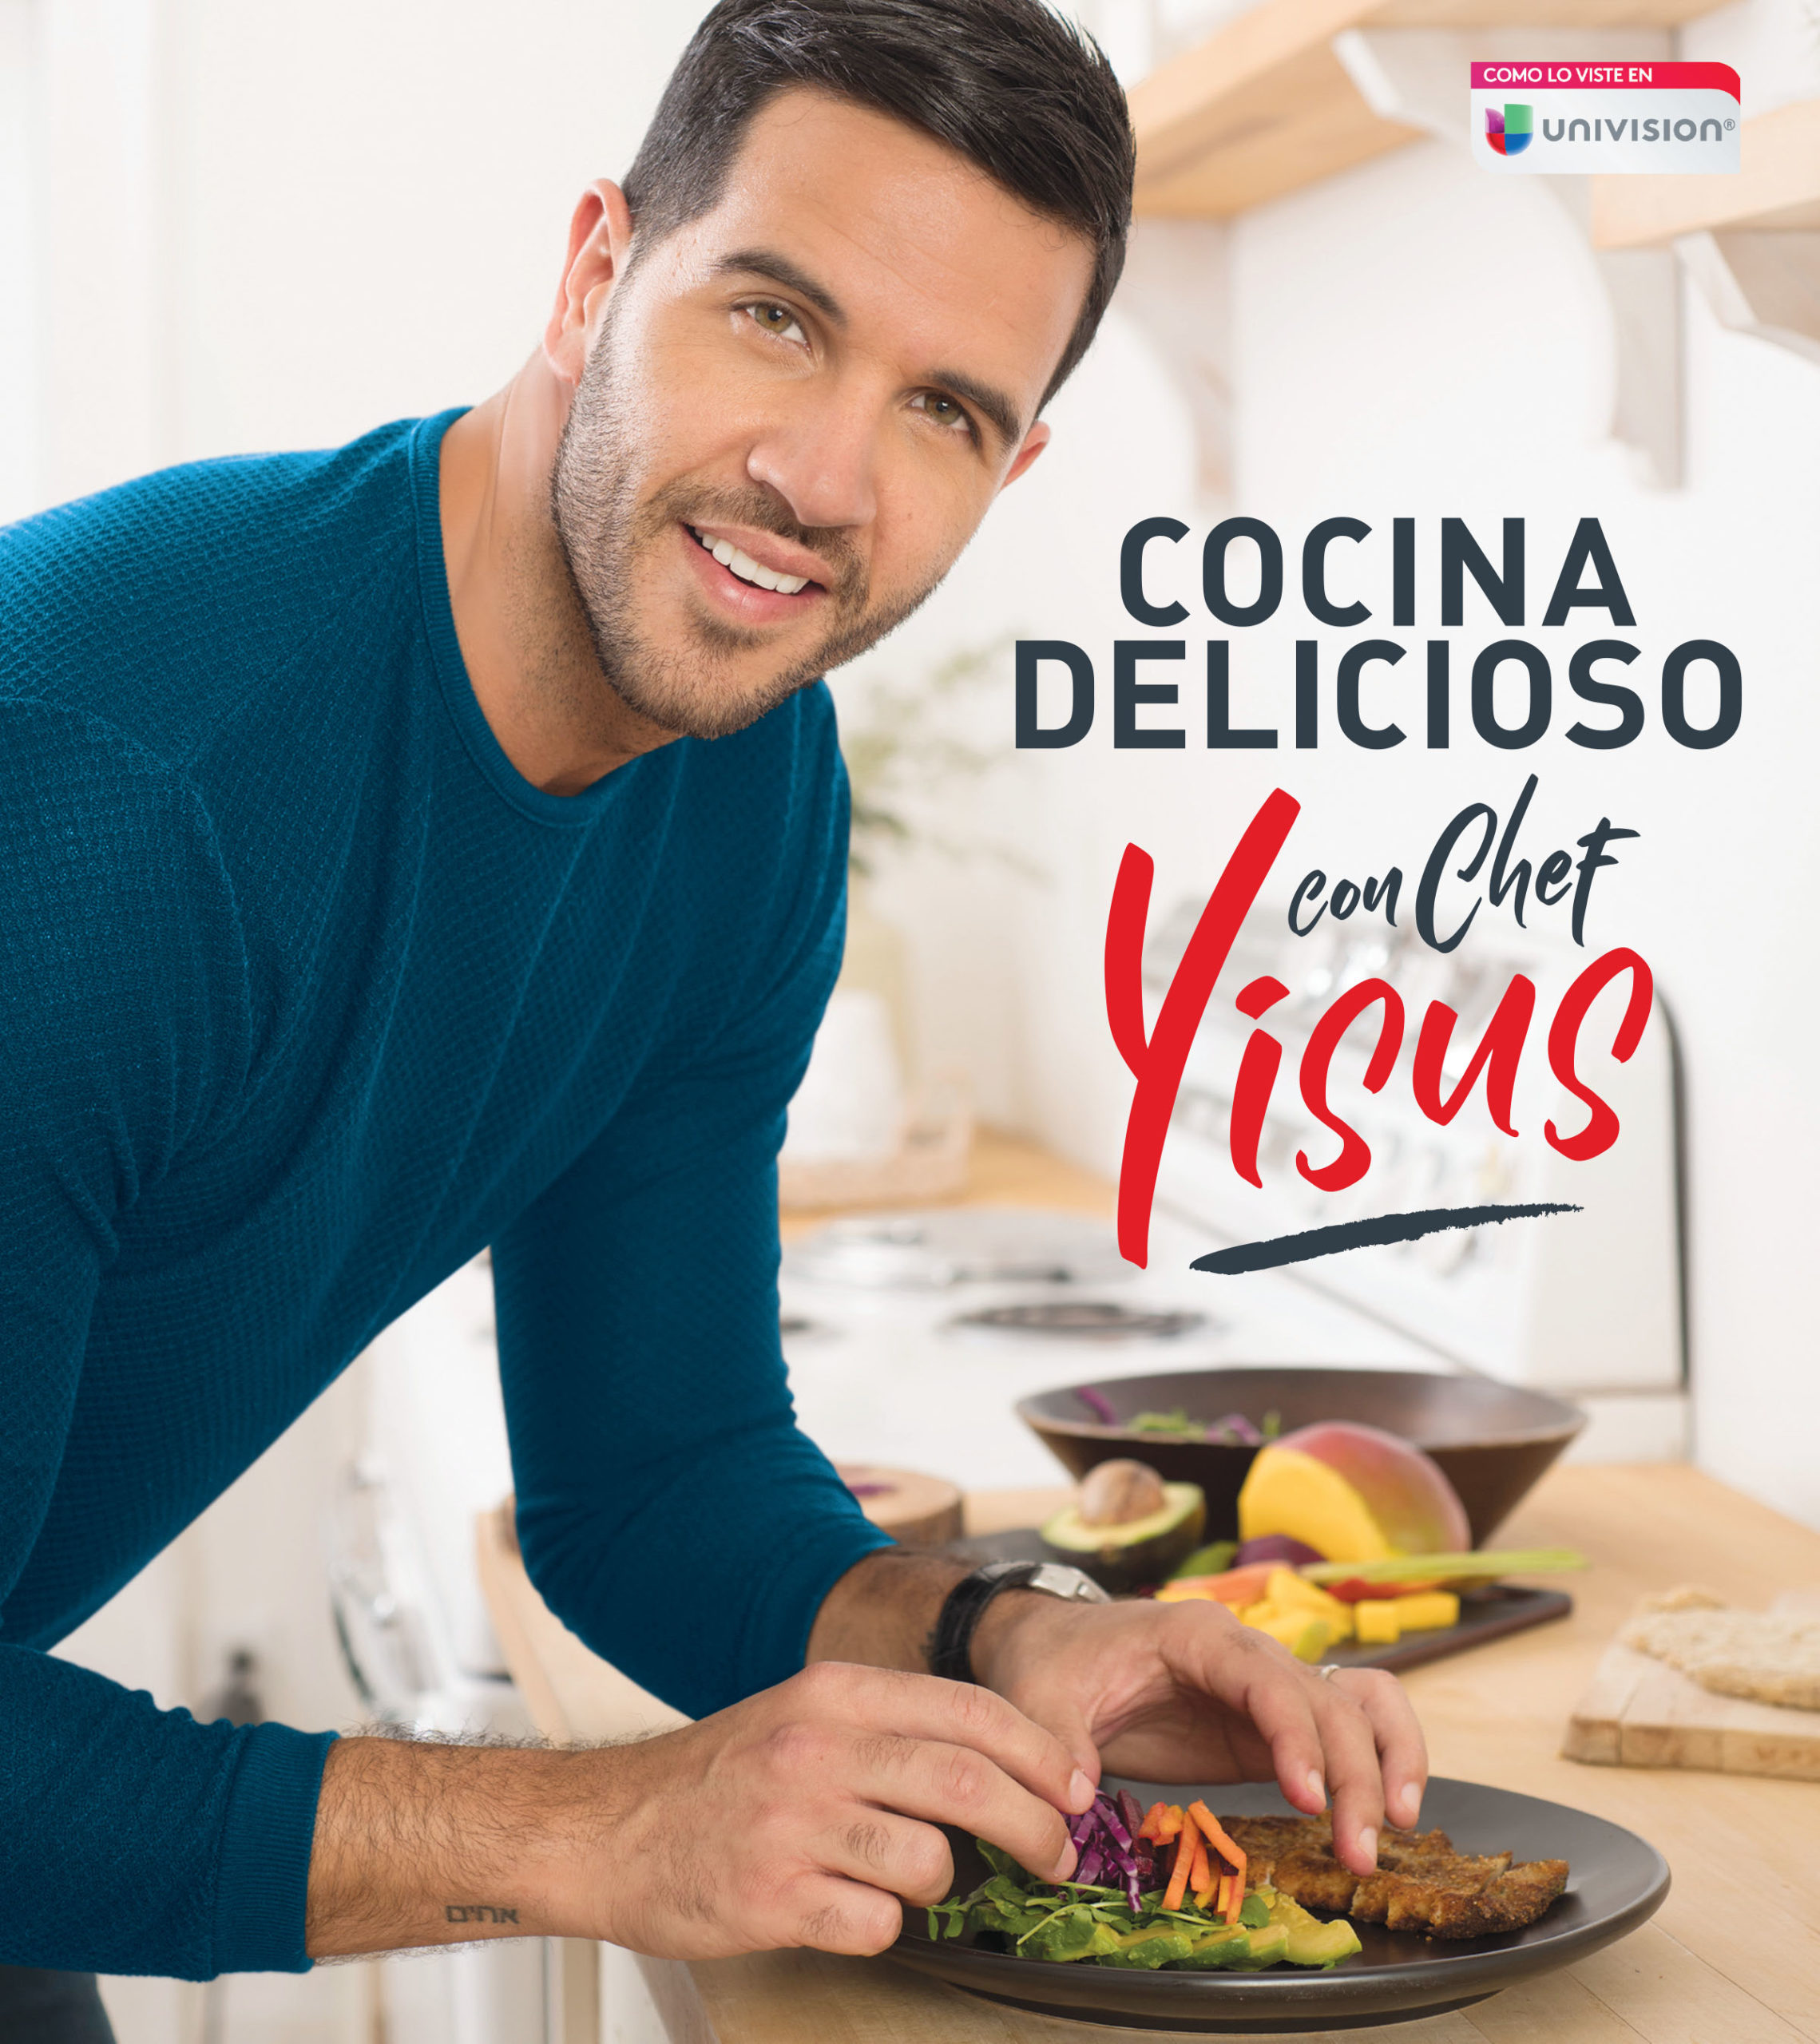 Despierta América” Celebrity Chef Publishes his First Book, Cocina  Delicioso con Chef Yisus - TelevisaUnivision